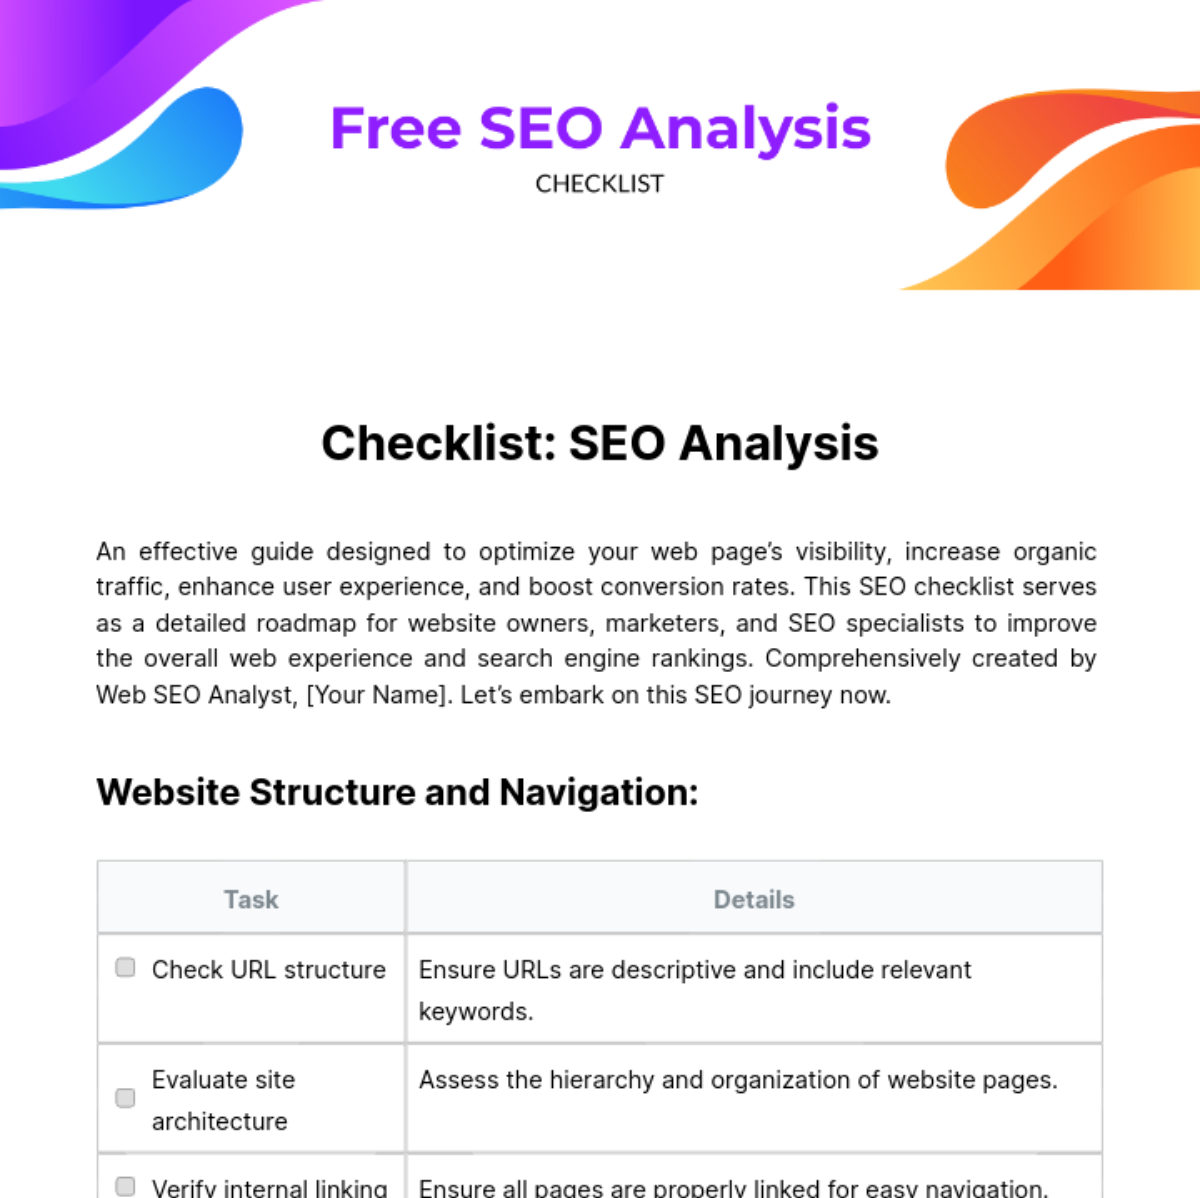 Free SEO Analysis Checklist Template